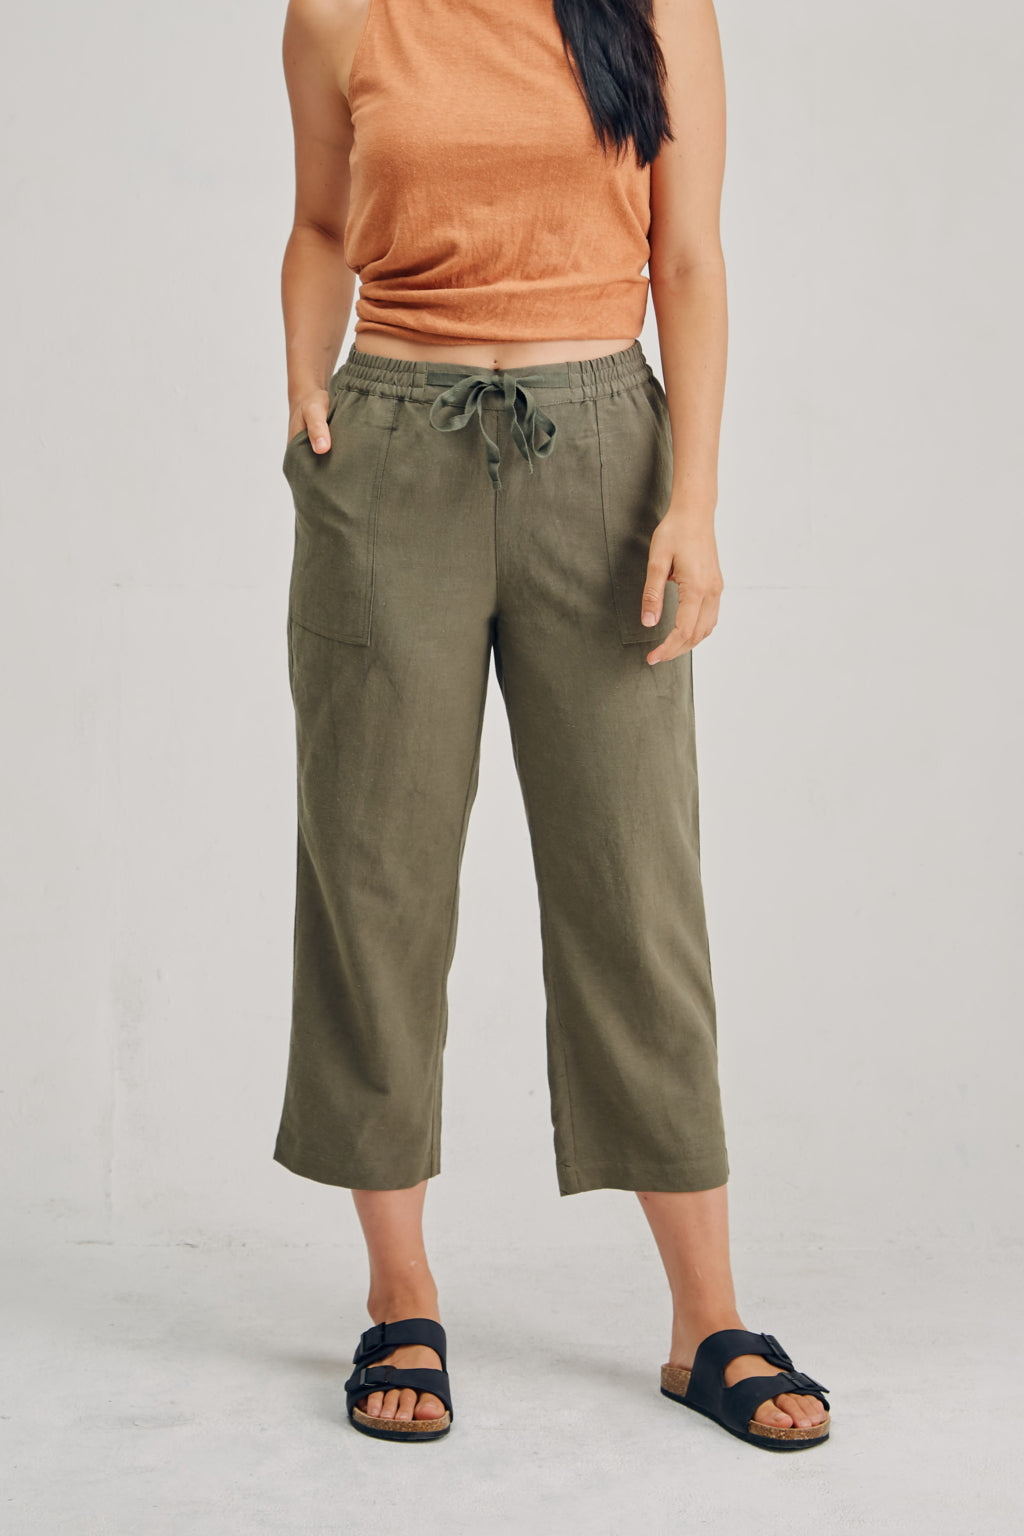 Ladies’ Hemp Cotton 7/8 Elastic Waist Pants | Khaki - HempStitch.